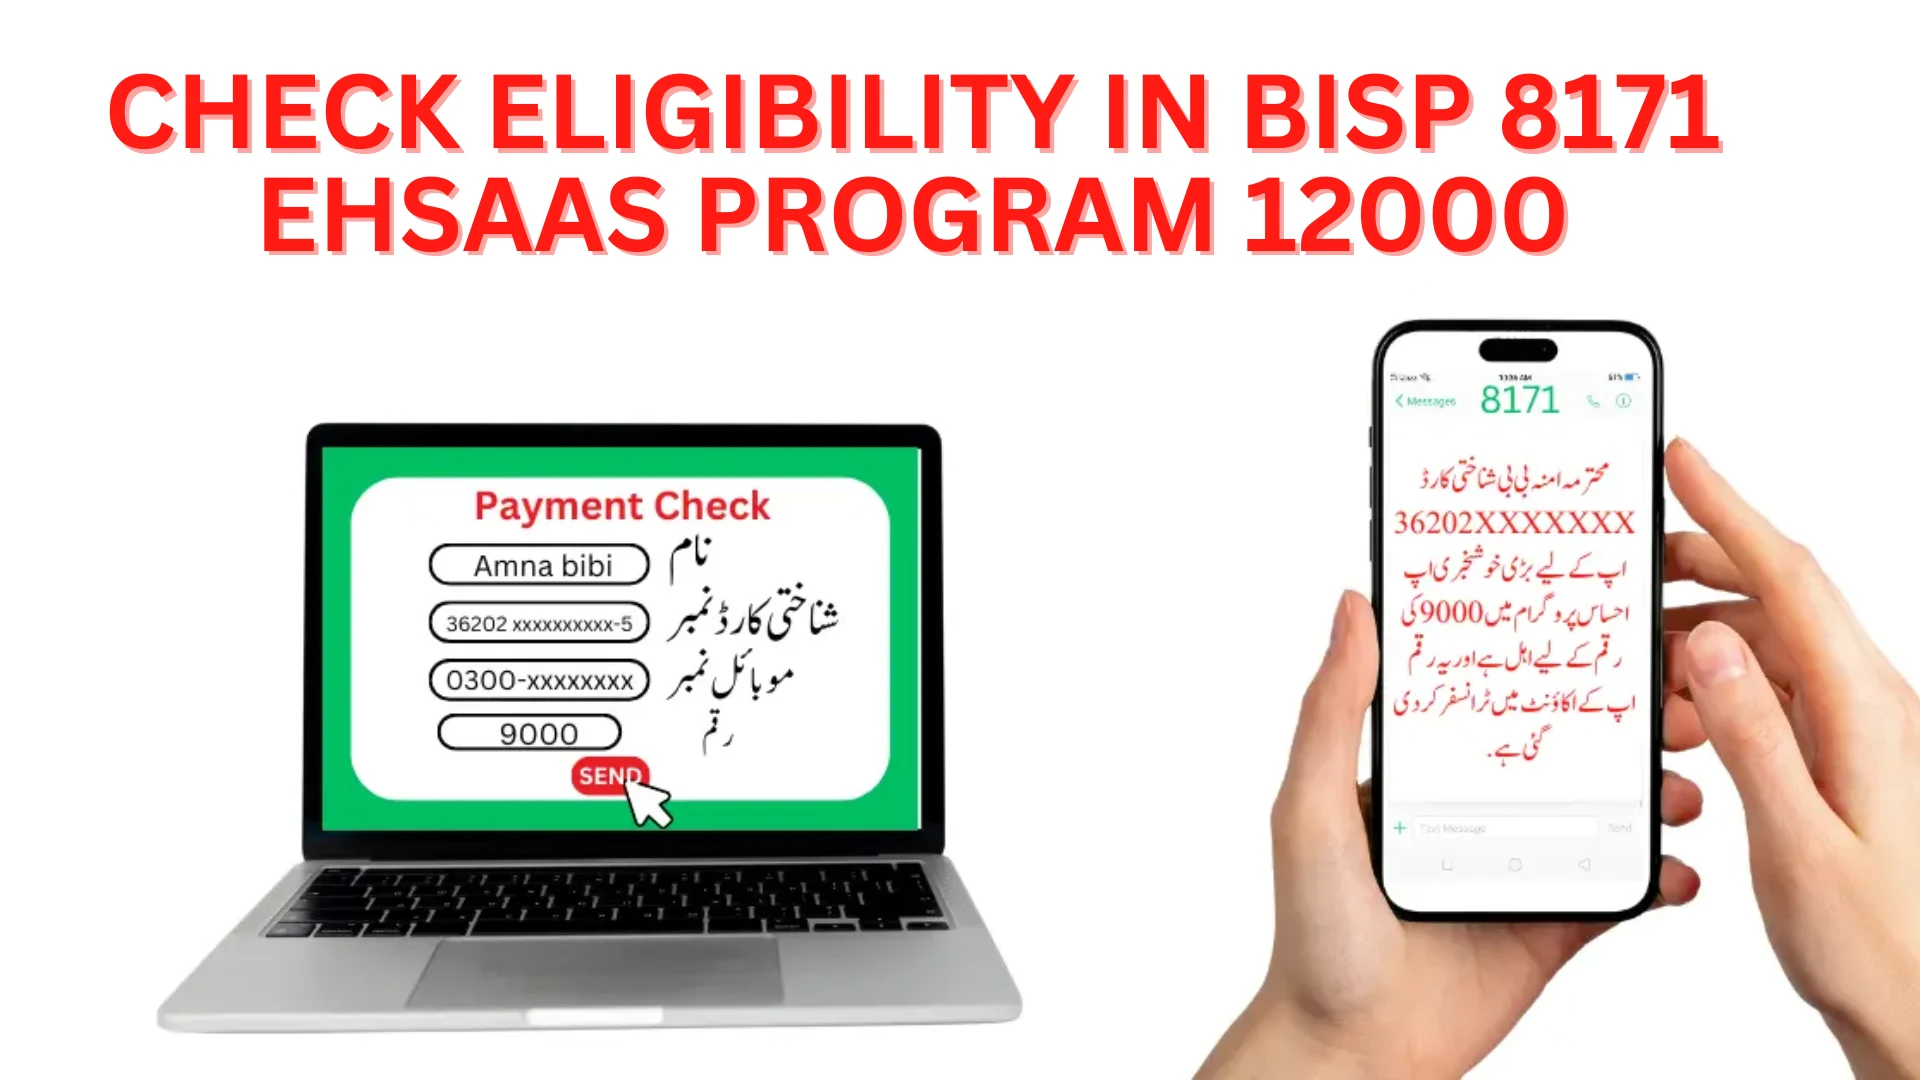 Check Eligibility in BISP 8171 Ehsaas Program 12000